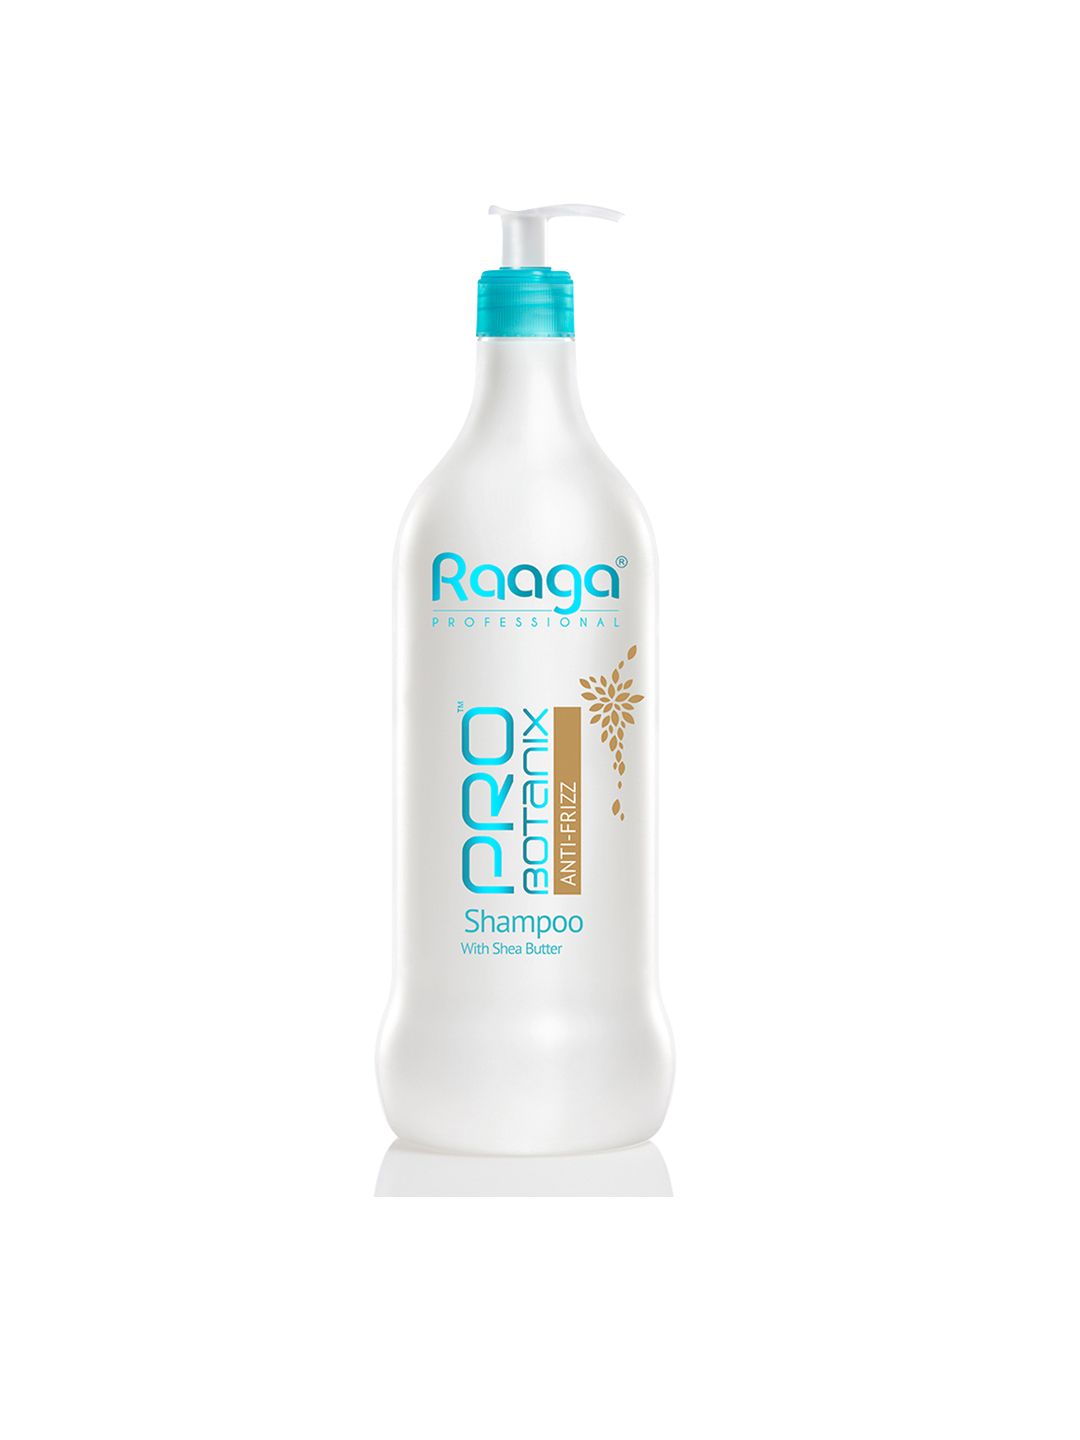 Raaga PROFESSIONAL Pro Botanix Anti Frizz Shampoo with Shea Butter 1 L Price in India